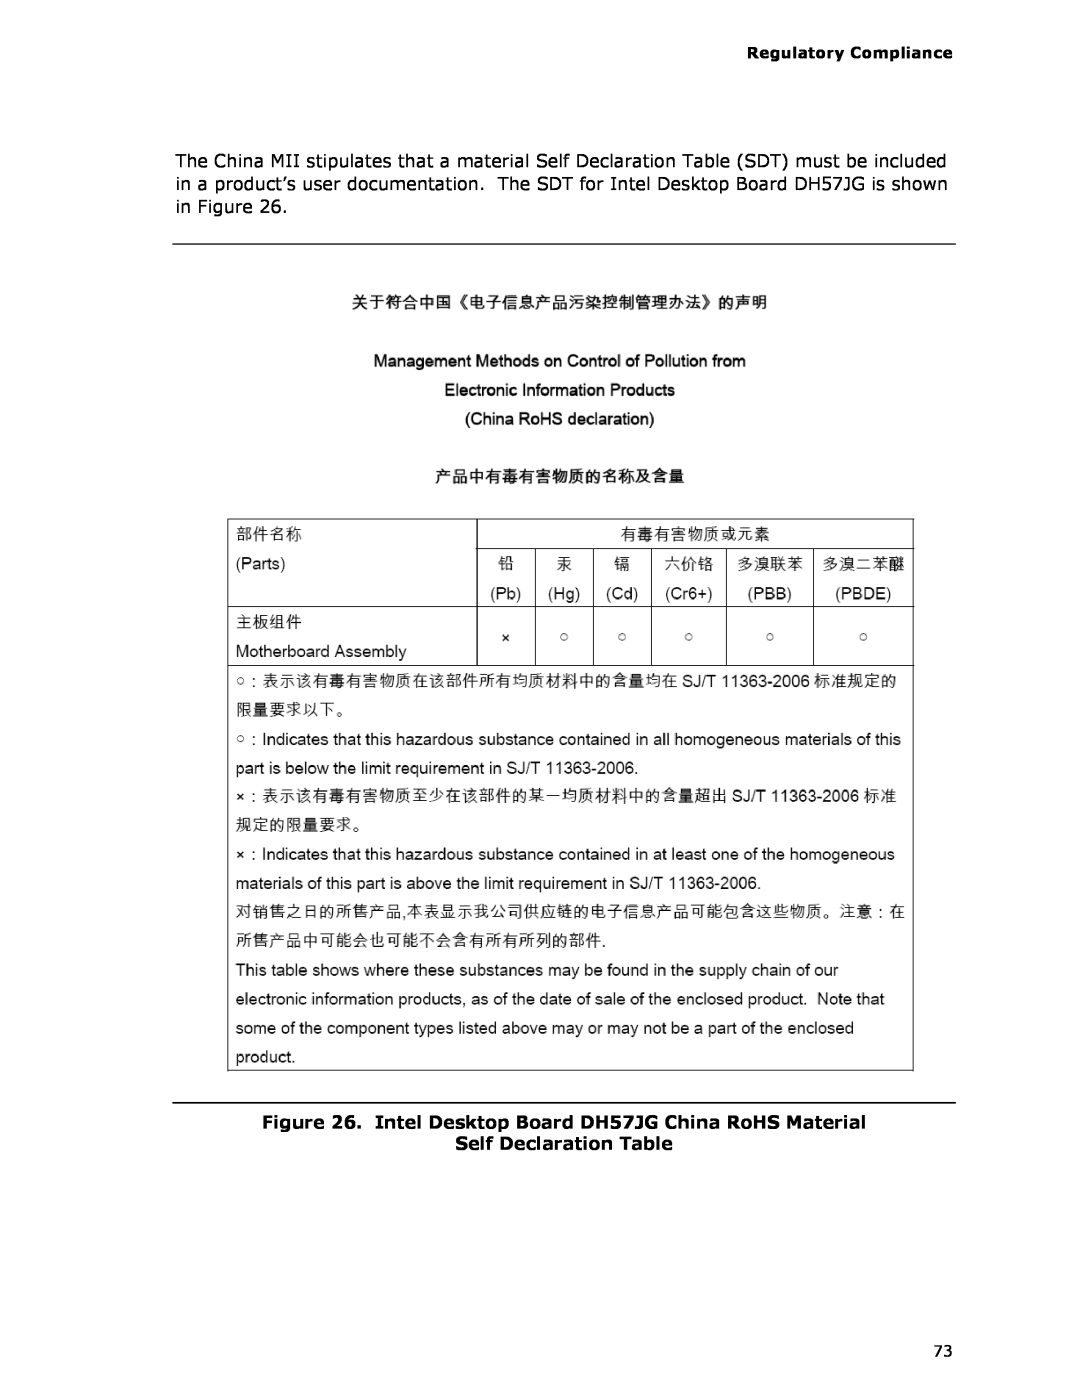 Intel BLKDH57JG manual Intel Desktop Board DH57JG China RoHS Material, Self Declaration Table, Regulatory Compliance 